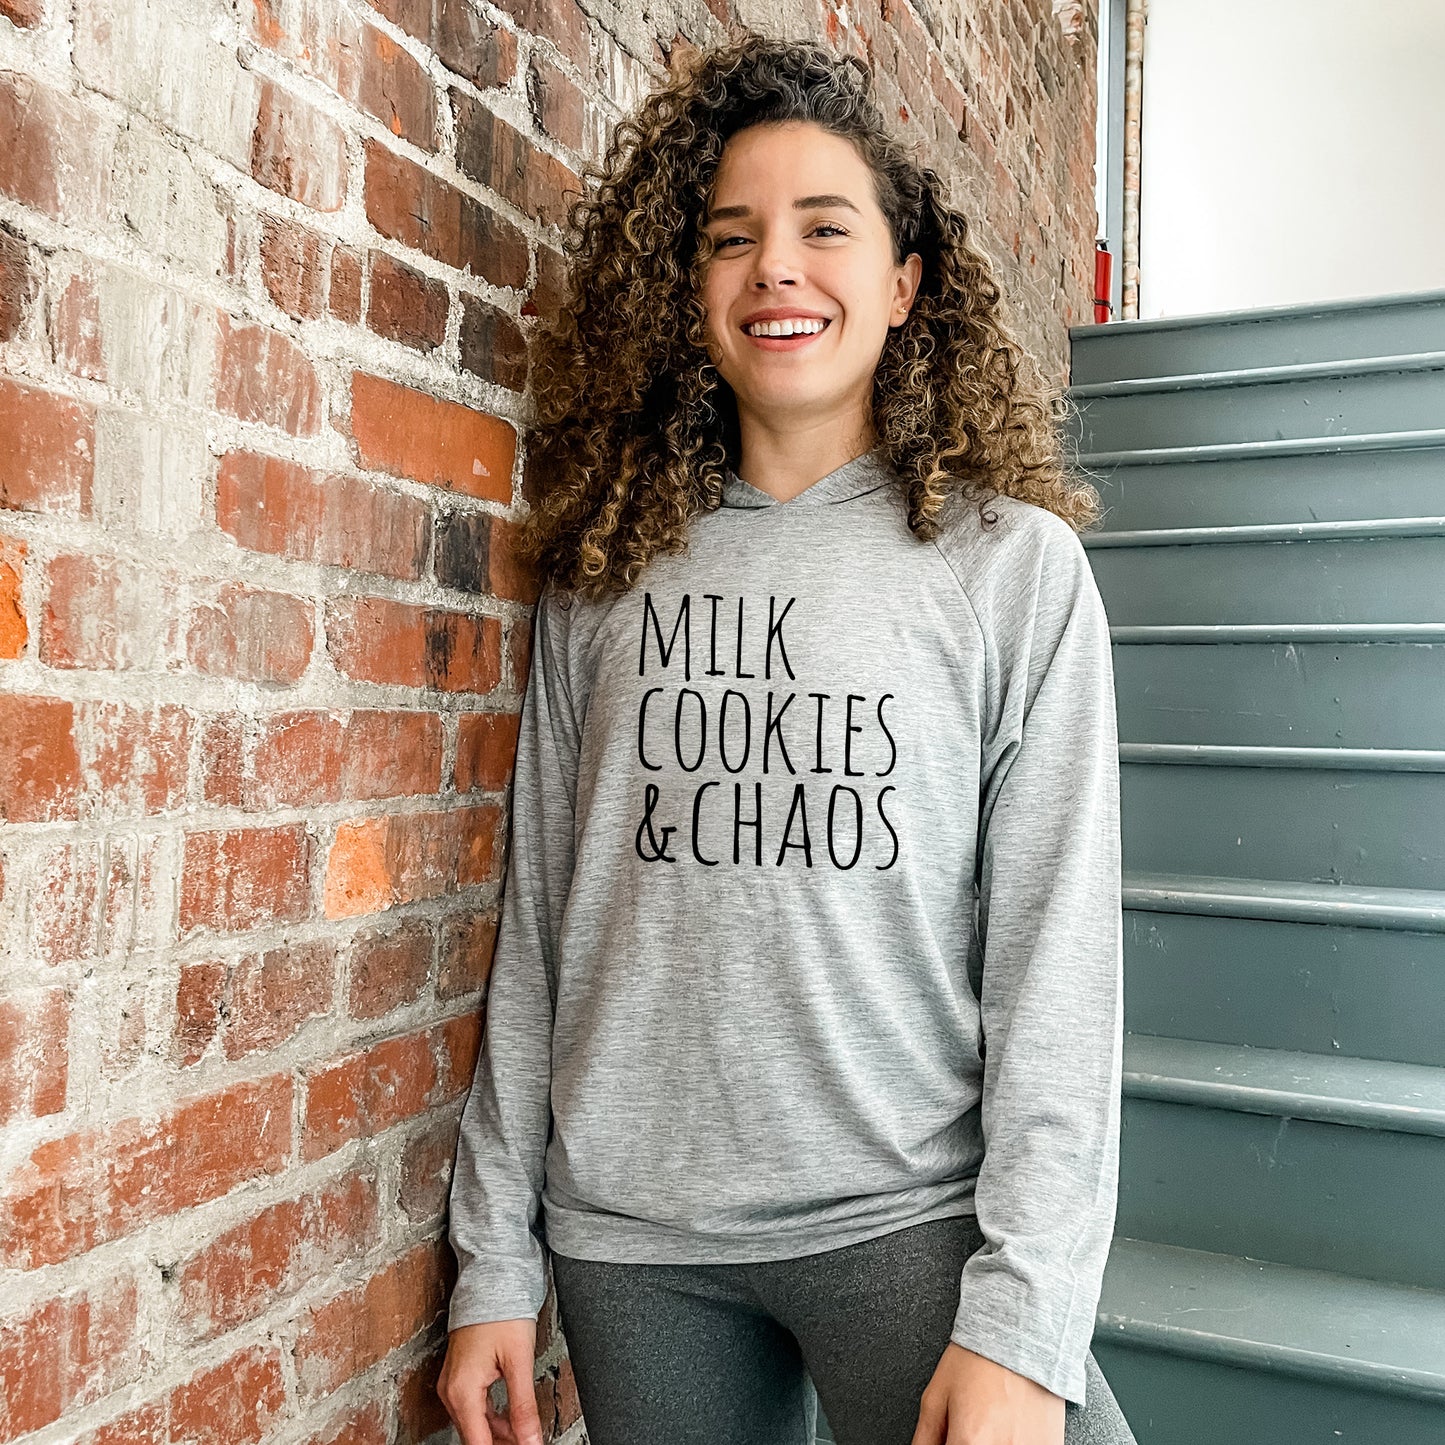 Milk Cookies & Chaos - Unisex T-Shirt Hoodie - Heather Gray